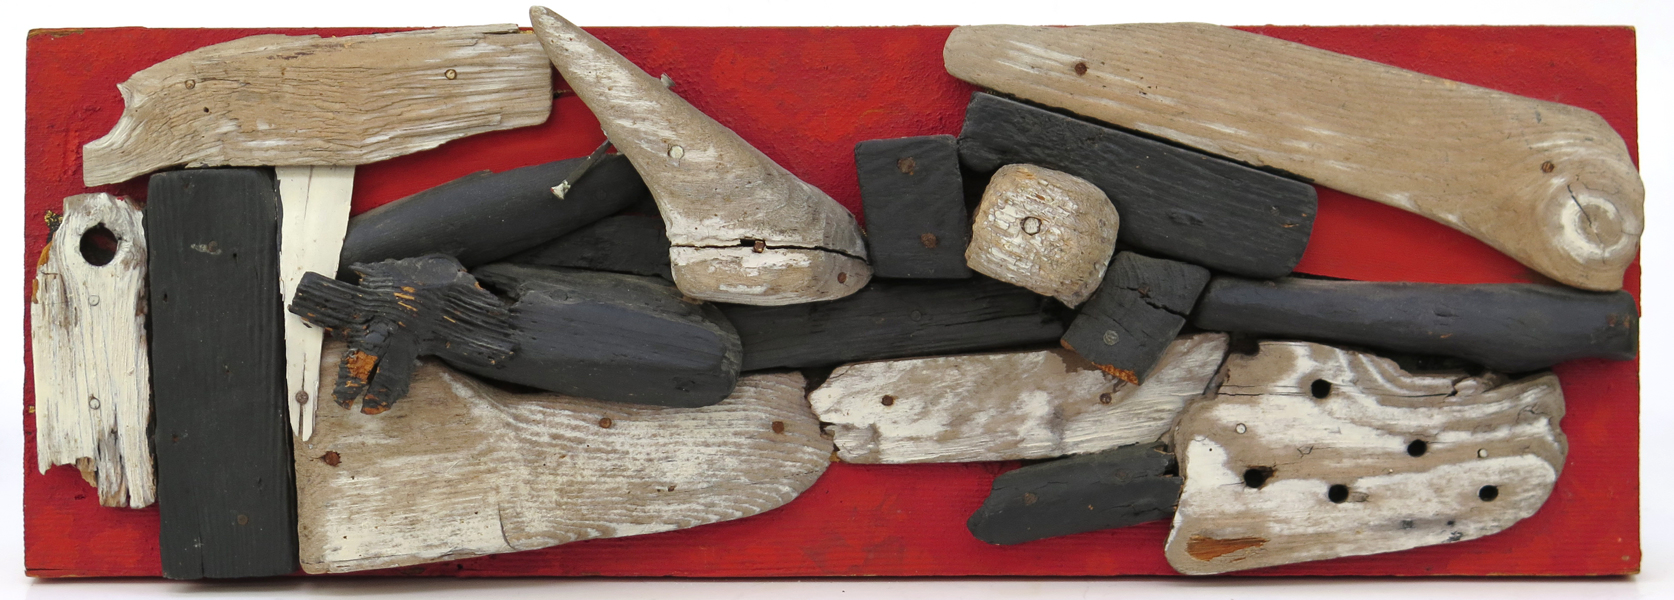 Sørensen-Sornum, Børge, relief/skultur, delvis bemålat trä, strandfynd, _18610a_8da23800b7d6362_lg.jpeg